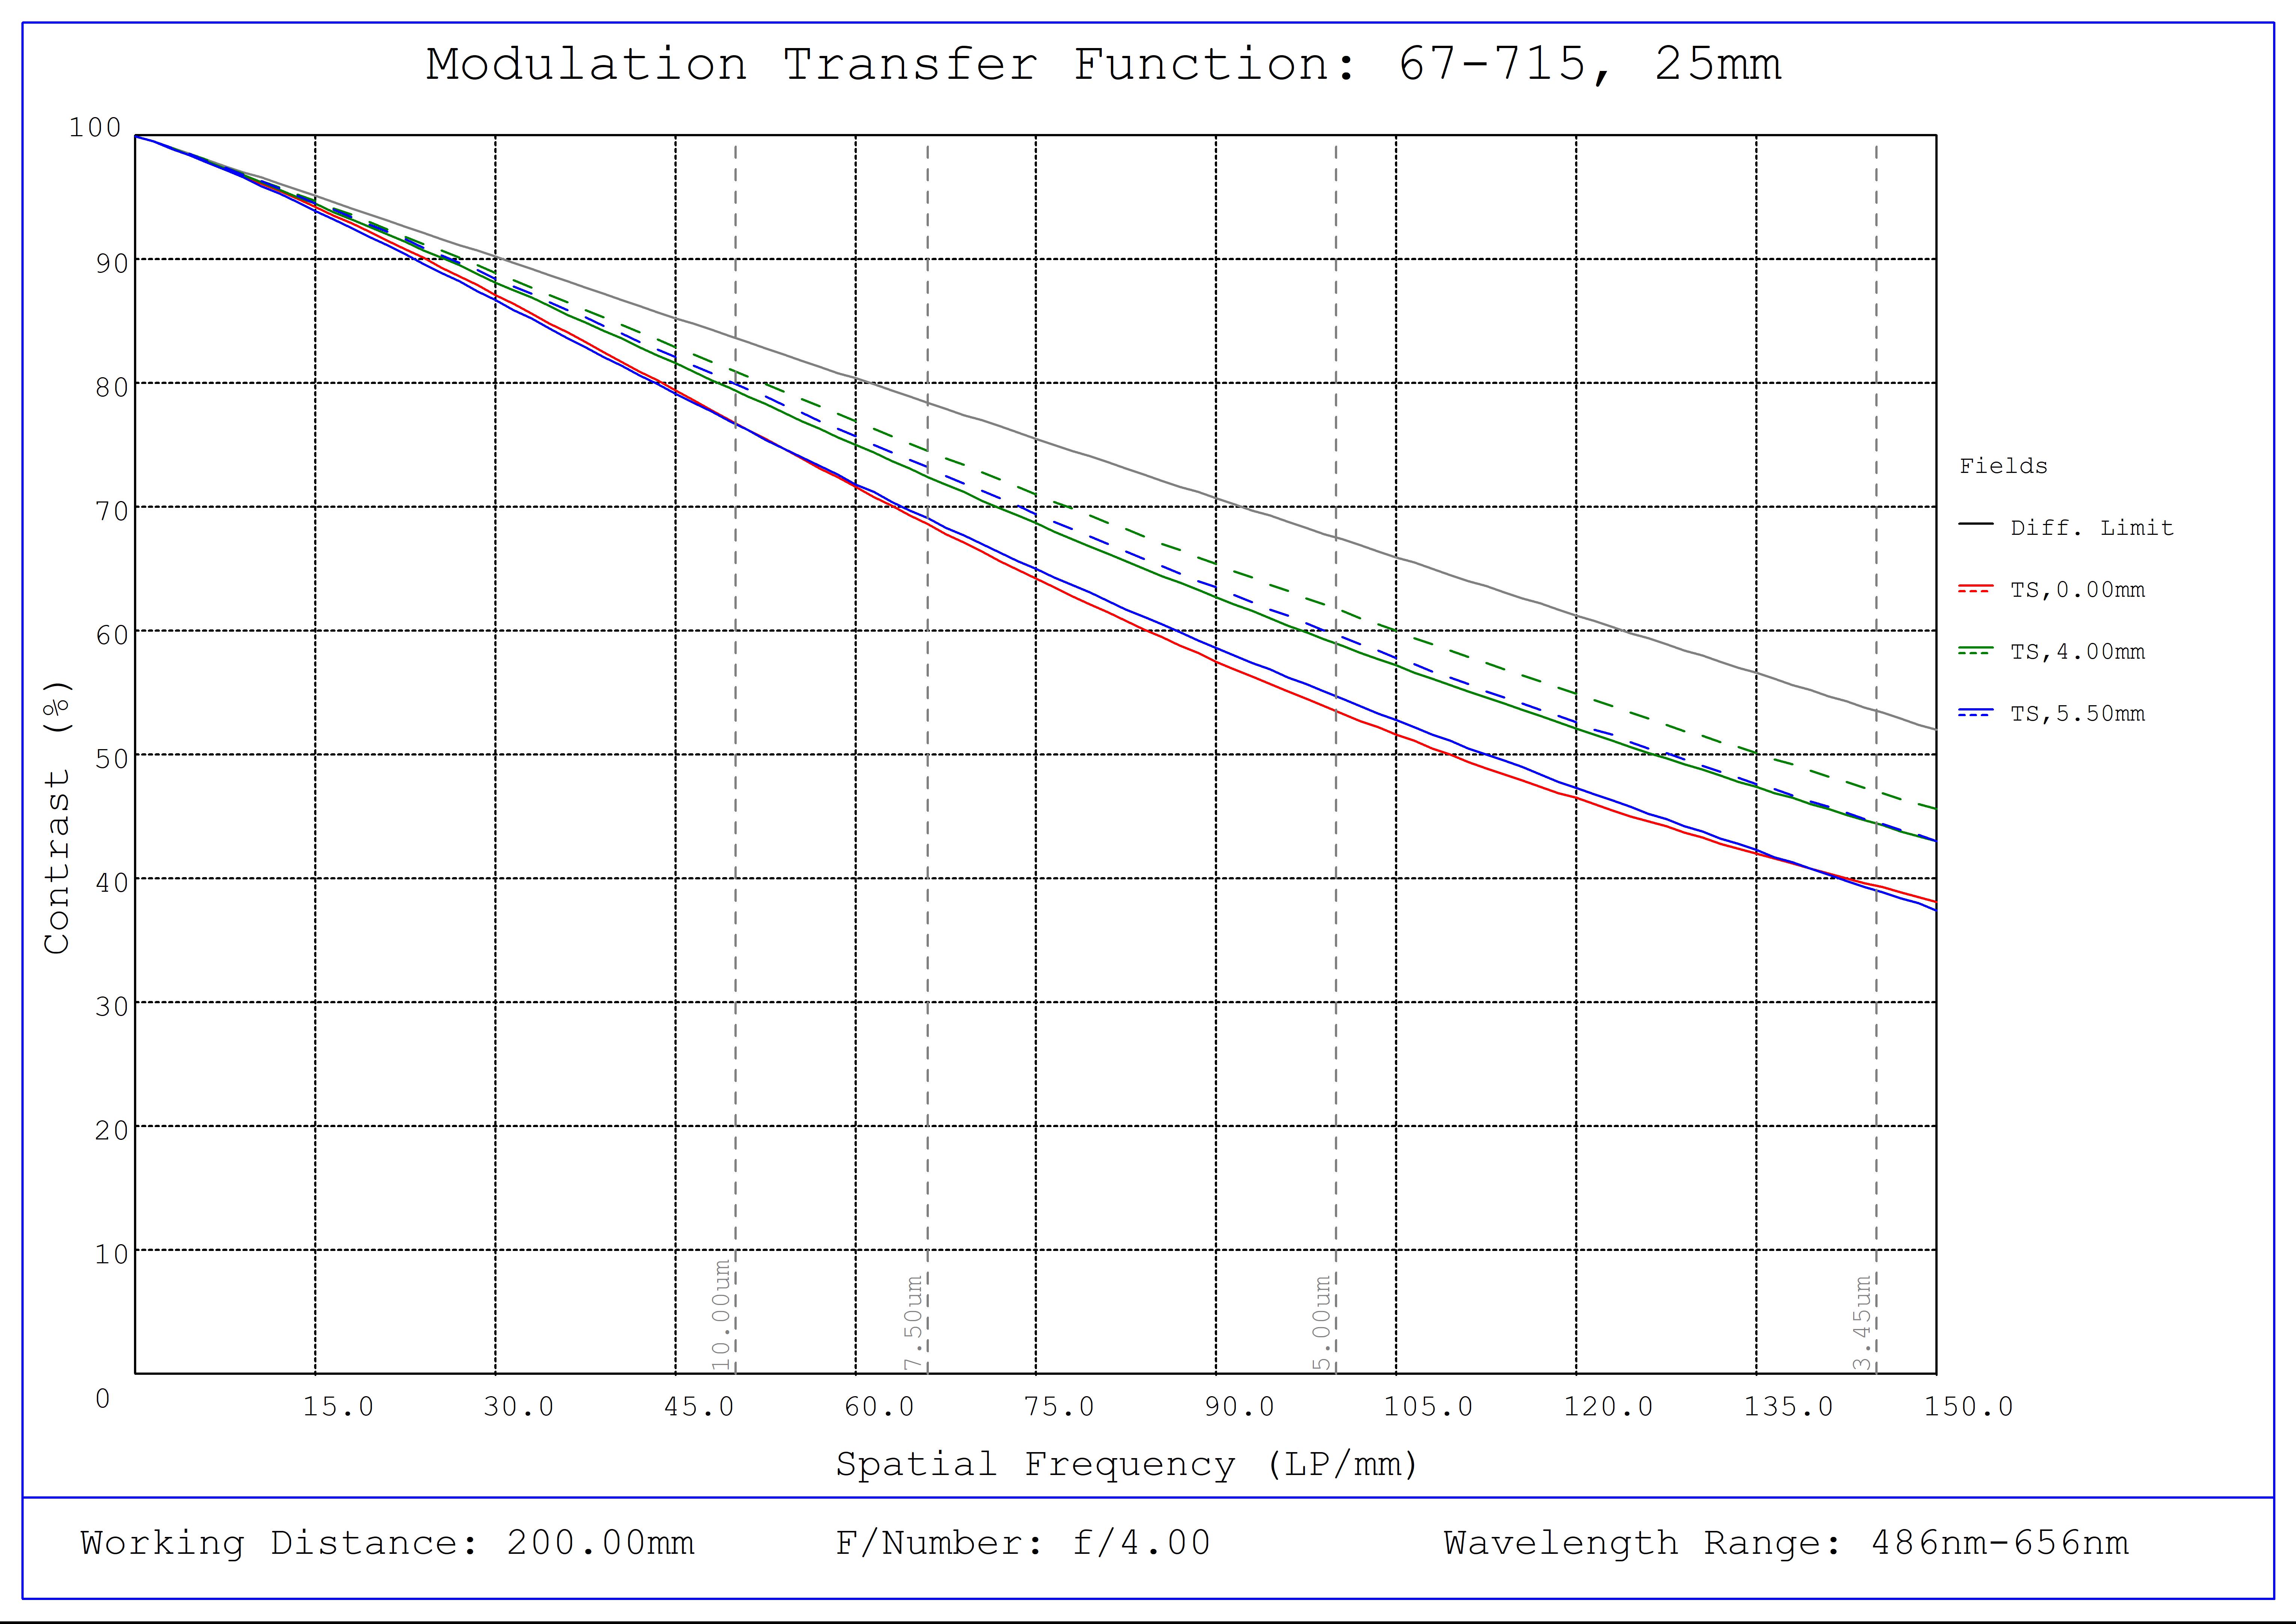 #67-715, 25mm C VIS-NIR Series Fixed Focal Length Lens, Modulated Transfer Function (MTF) Plot, 200mm Working Distance, f4